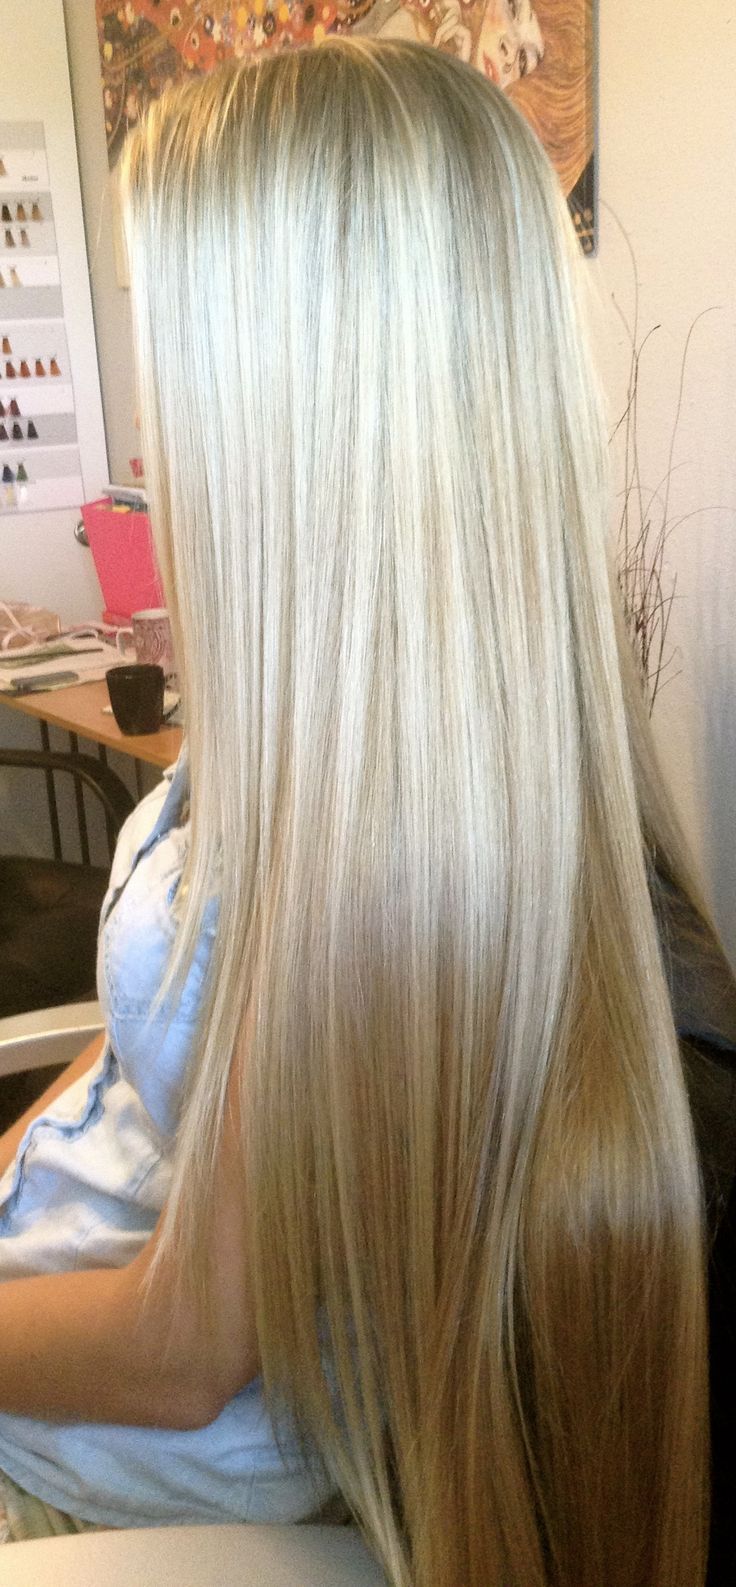 Long layered blonde hair